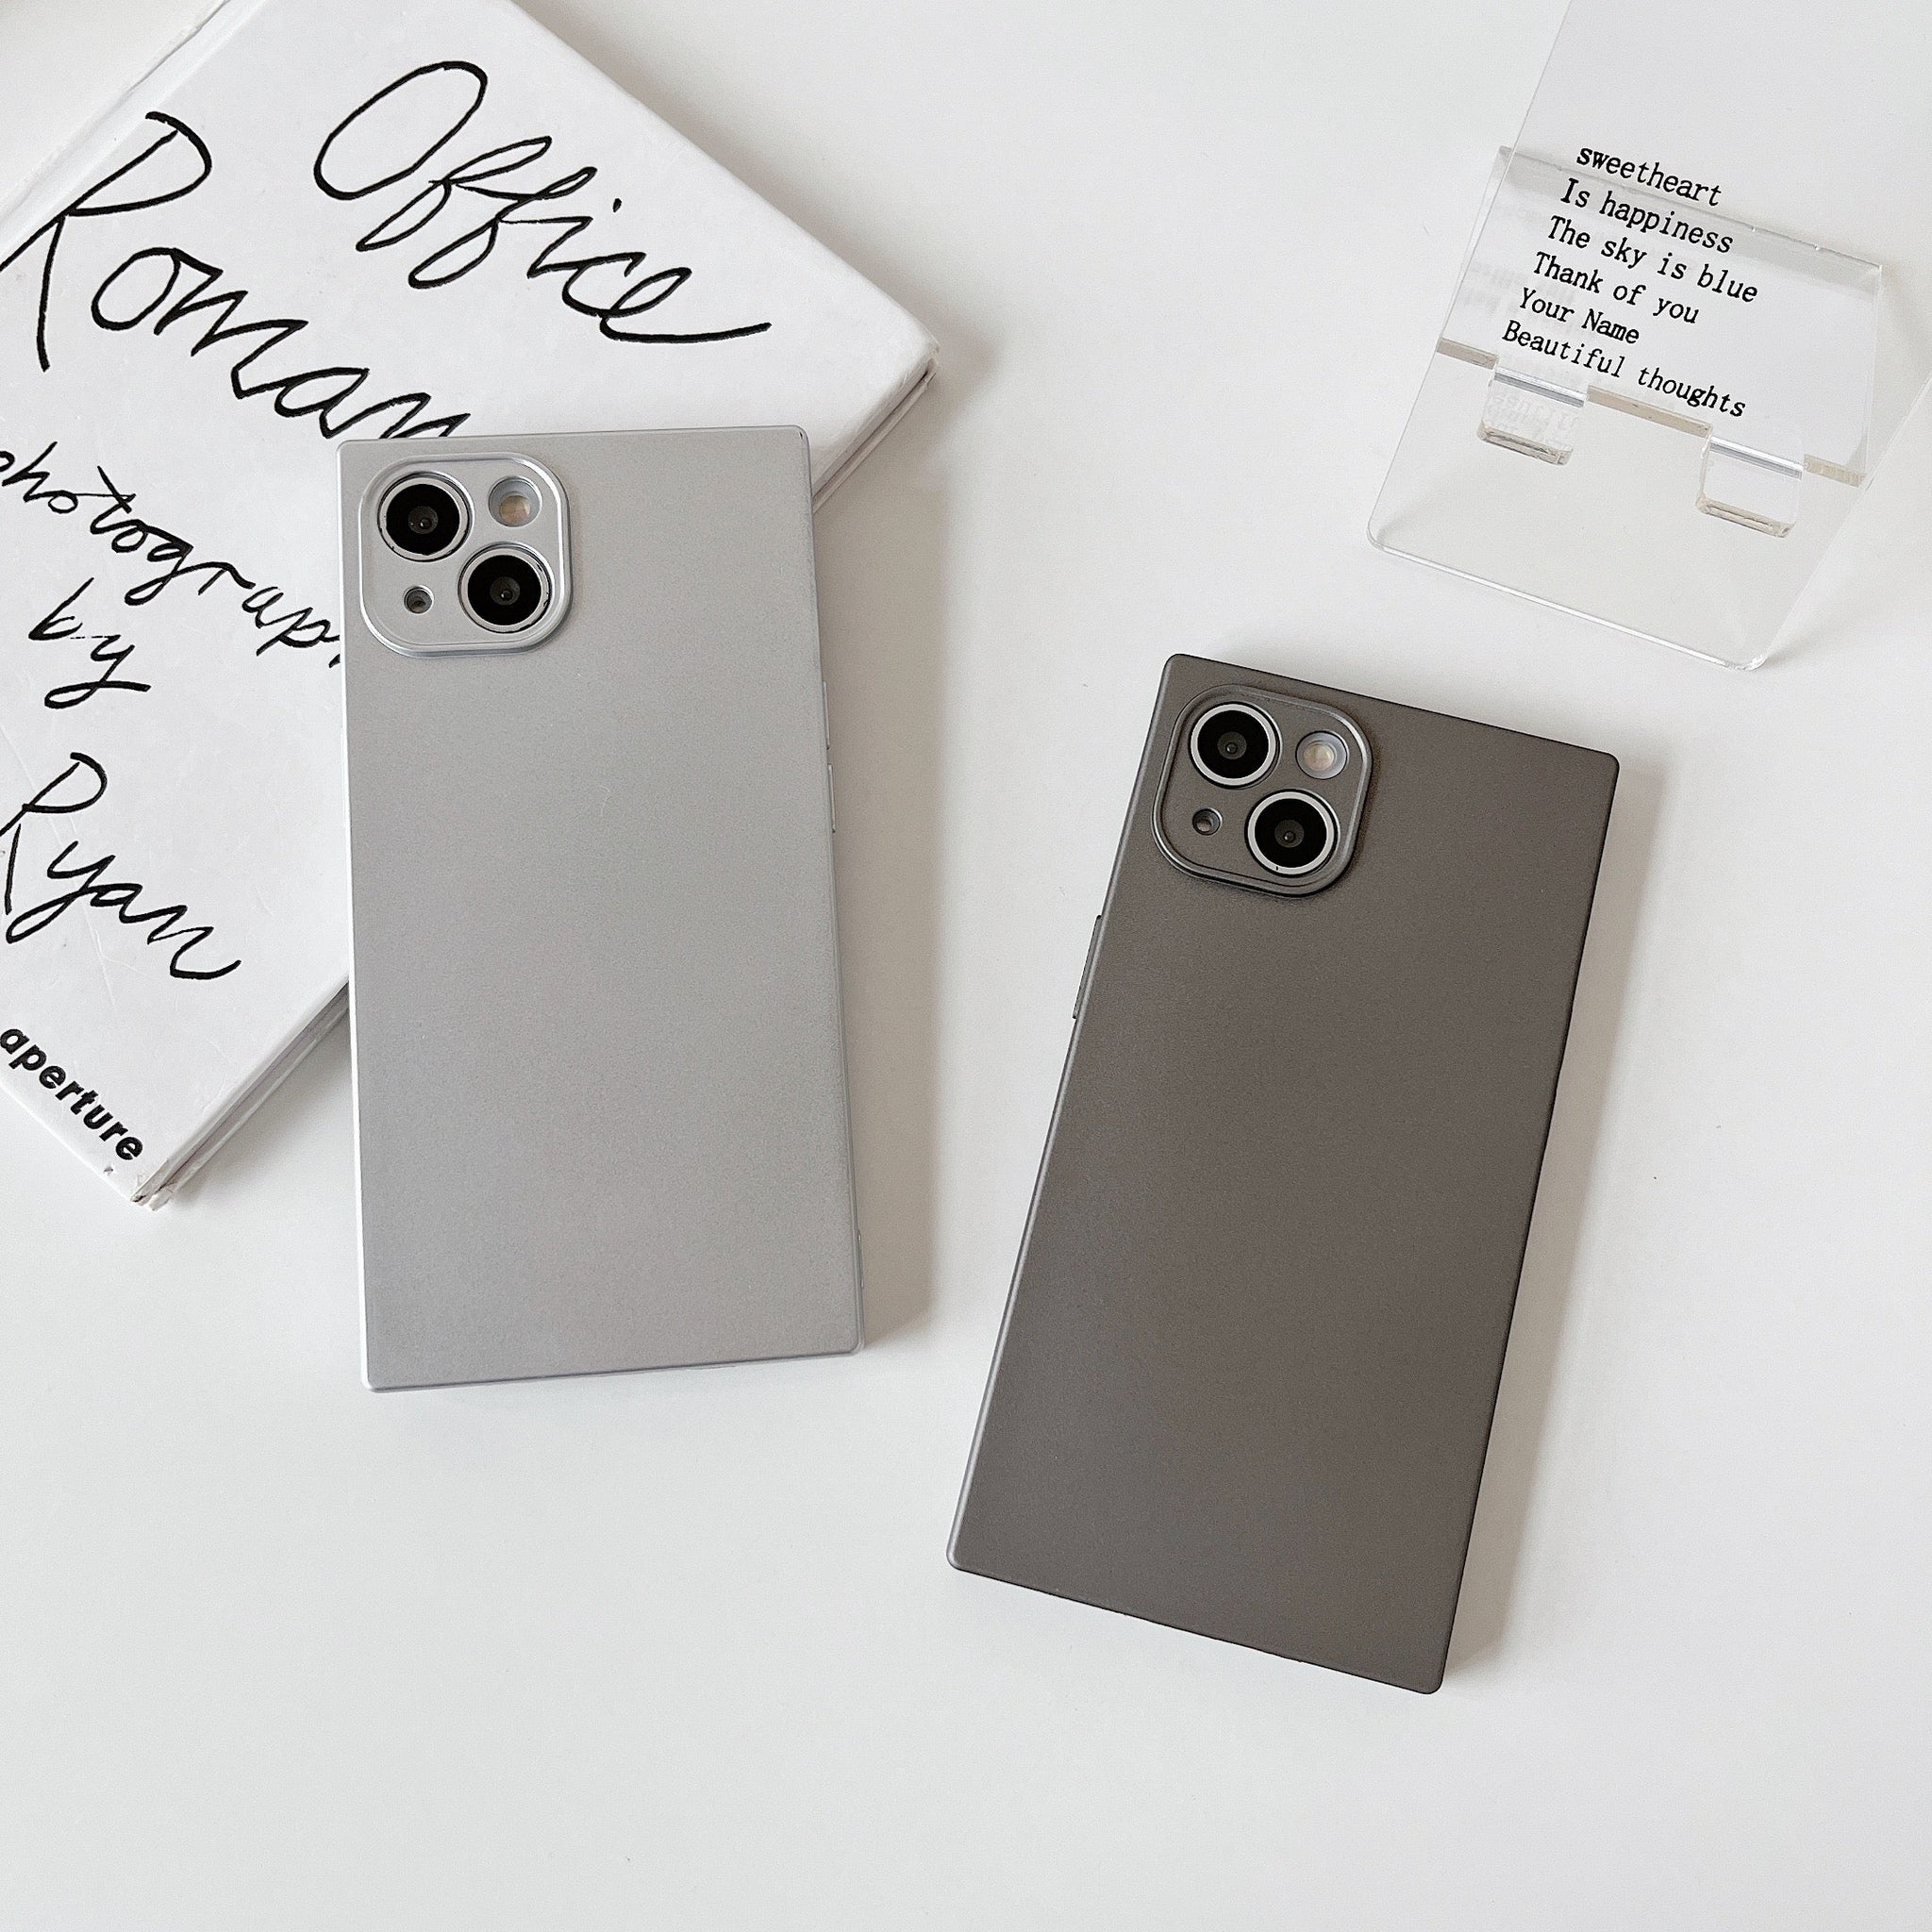 iPhone 11 Pro Max Case Square Silicone Camera Protector (Space Gray)